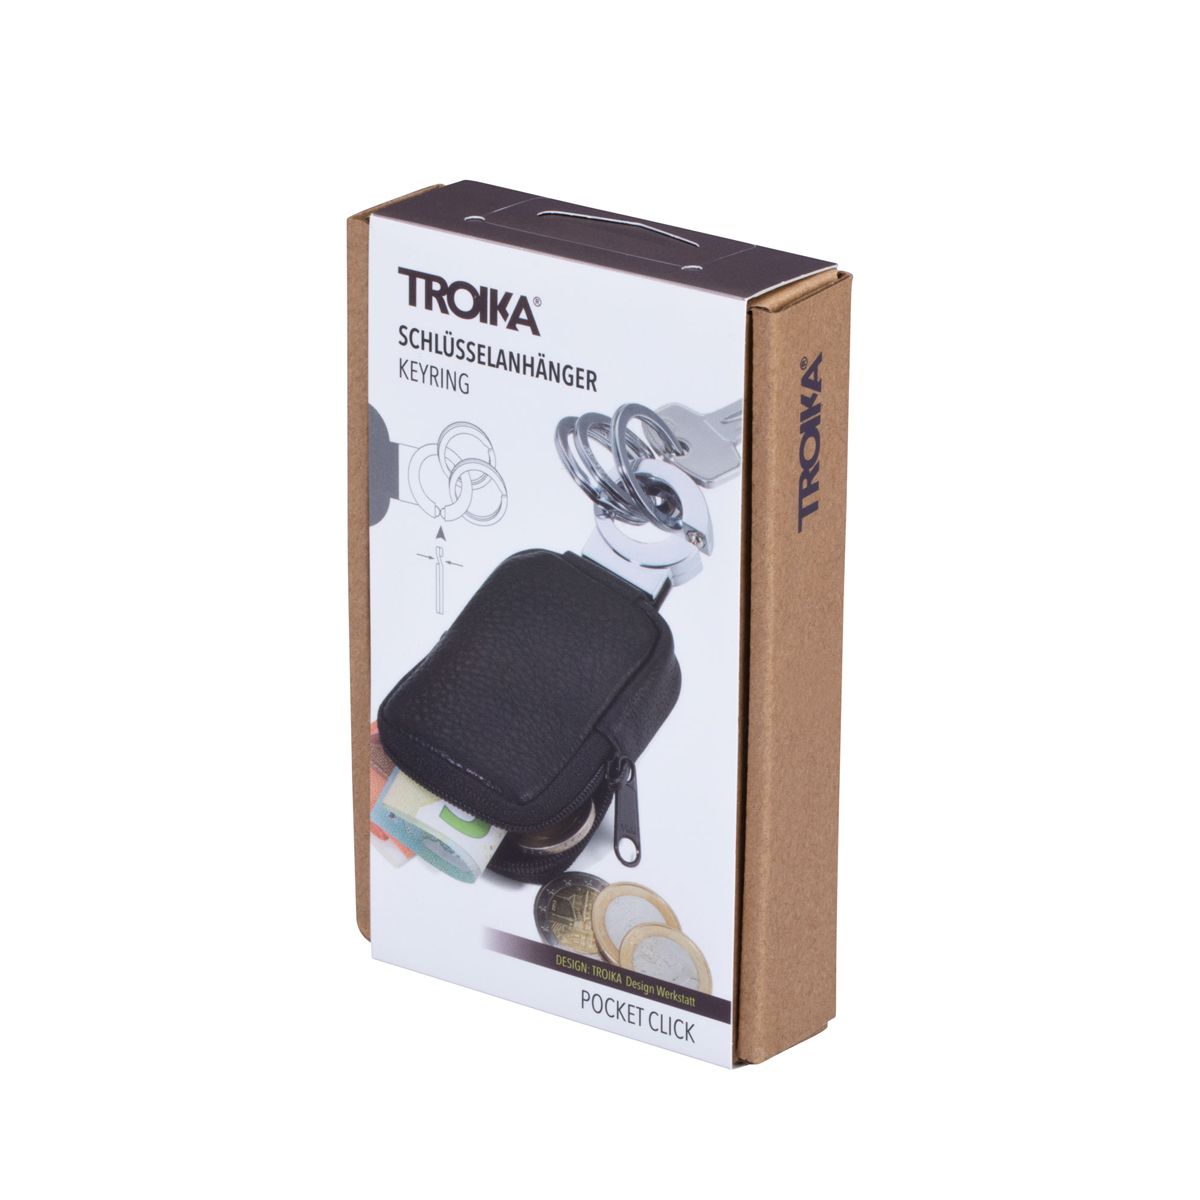 Troika - Keyring - Black leather case